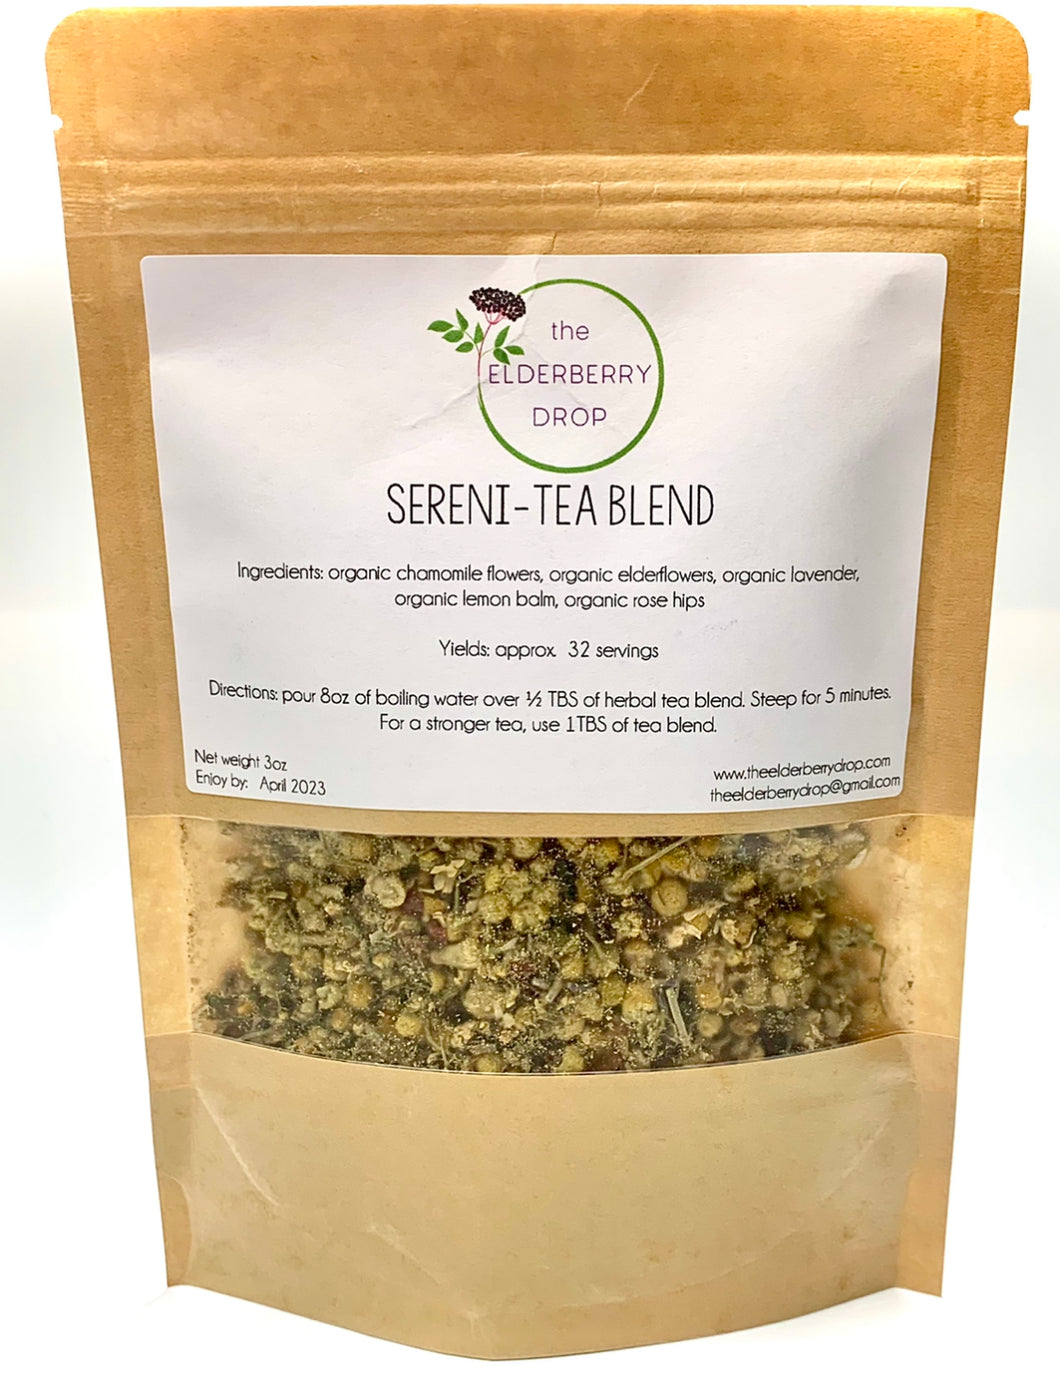 Sereni-tea Blend